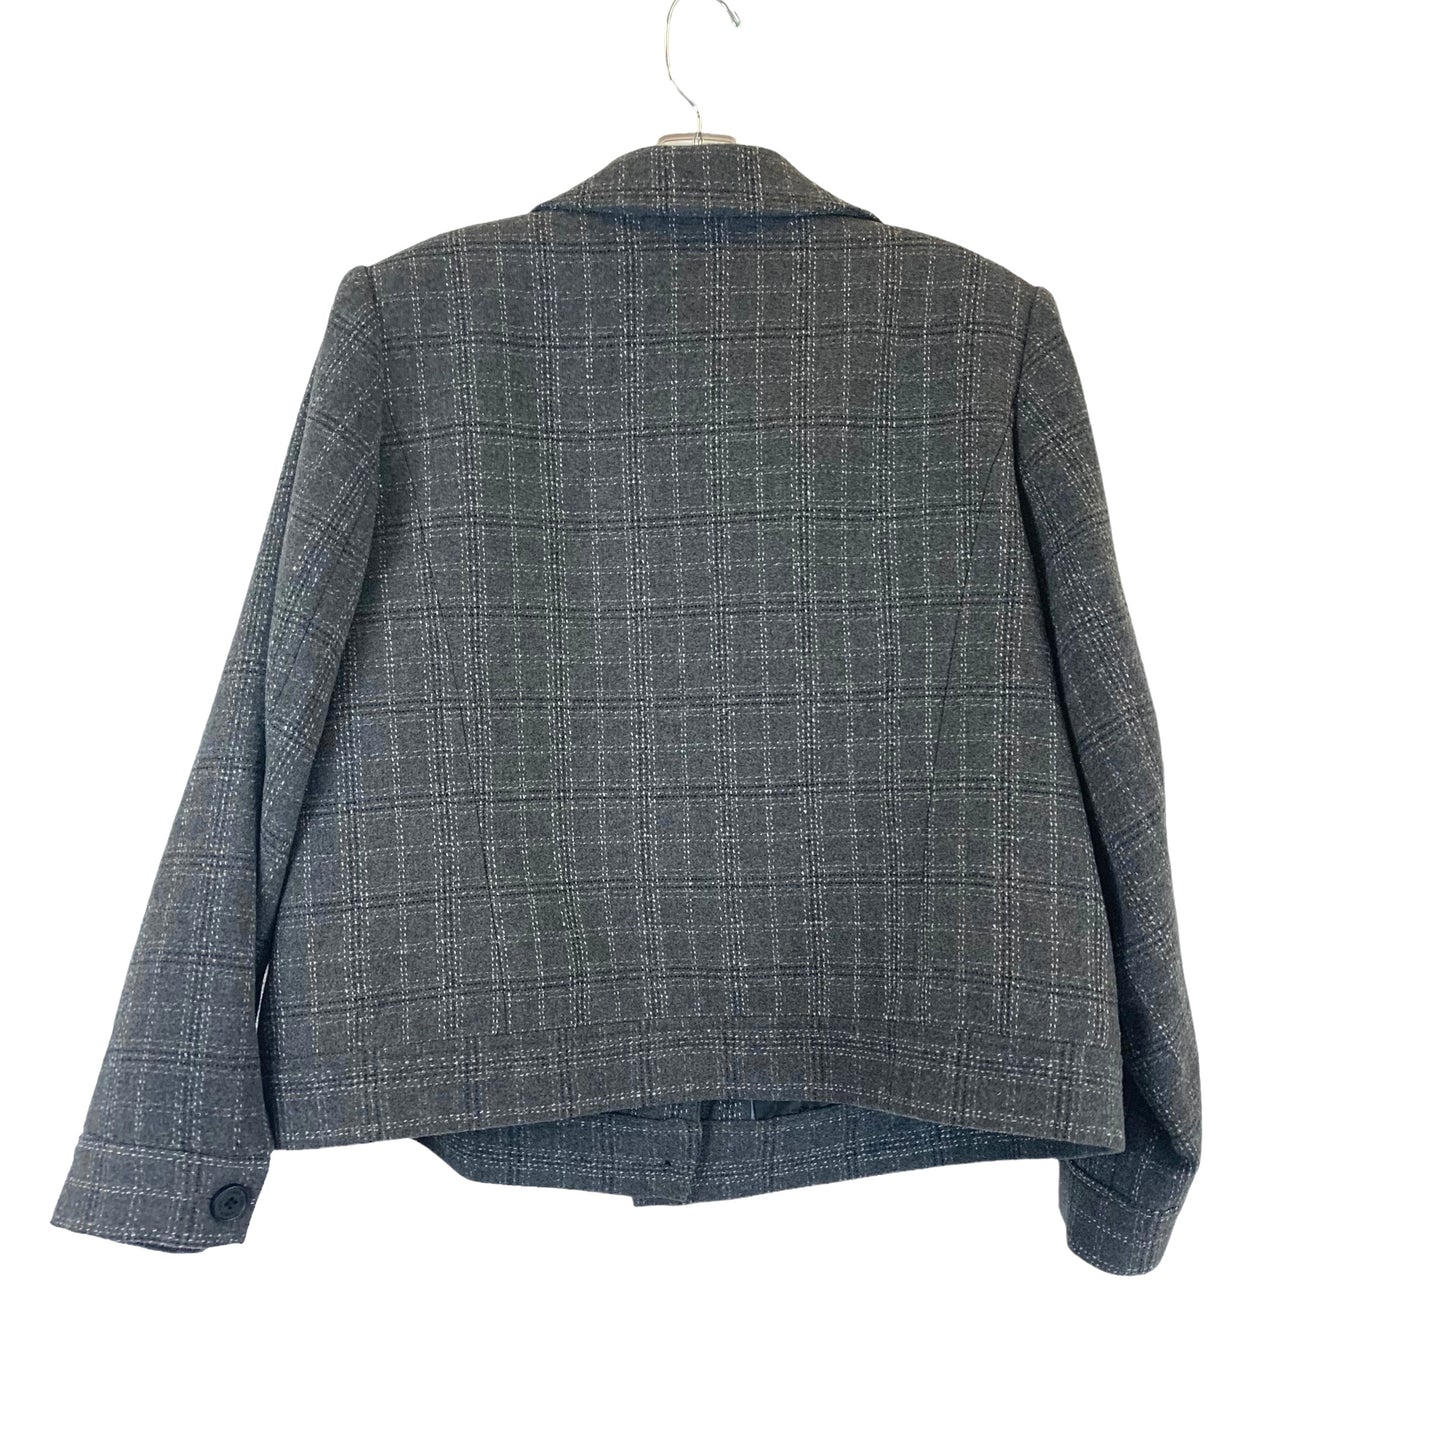 Jacket Other By Calvin Klein  Size: Xxl